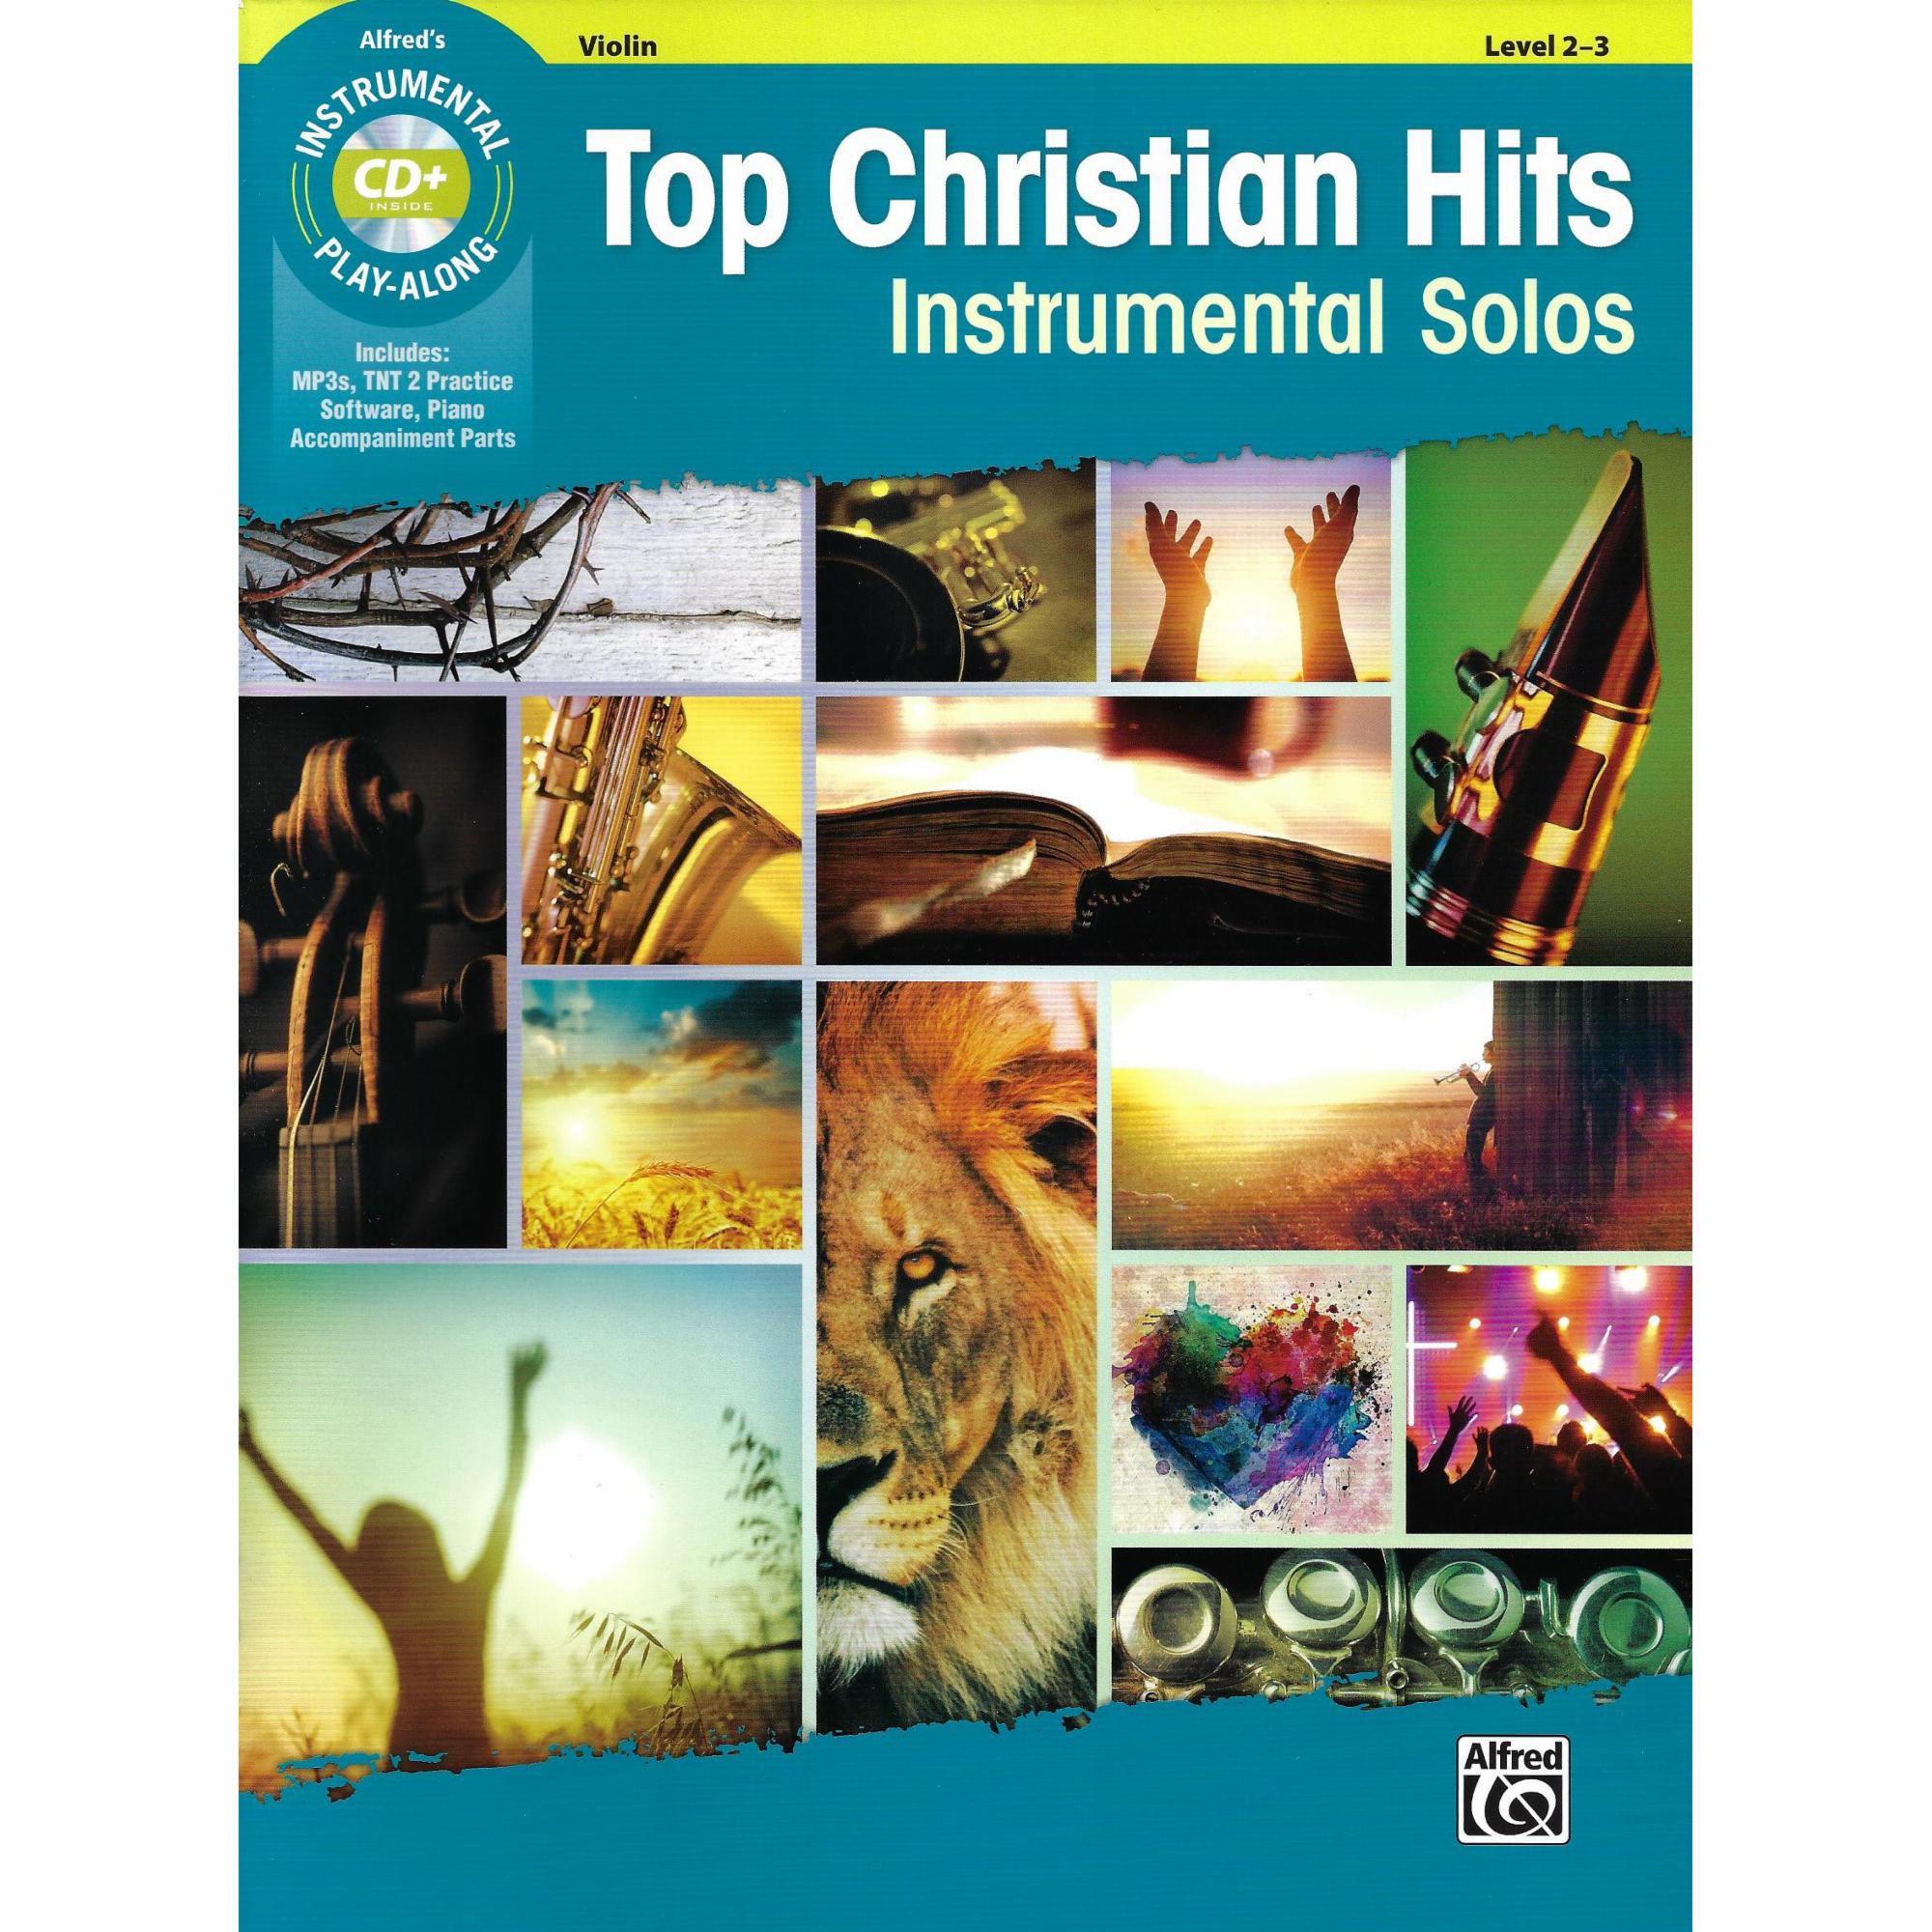 Top Christian Hits for Violin, Viola, or Cello